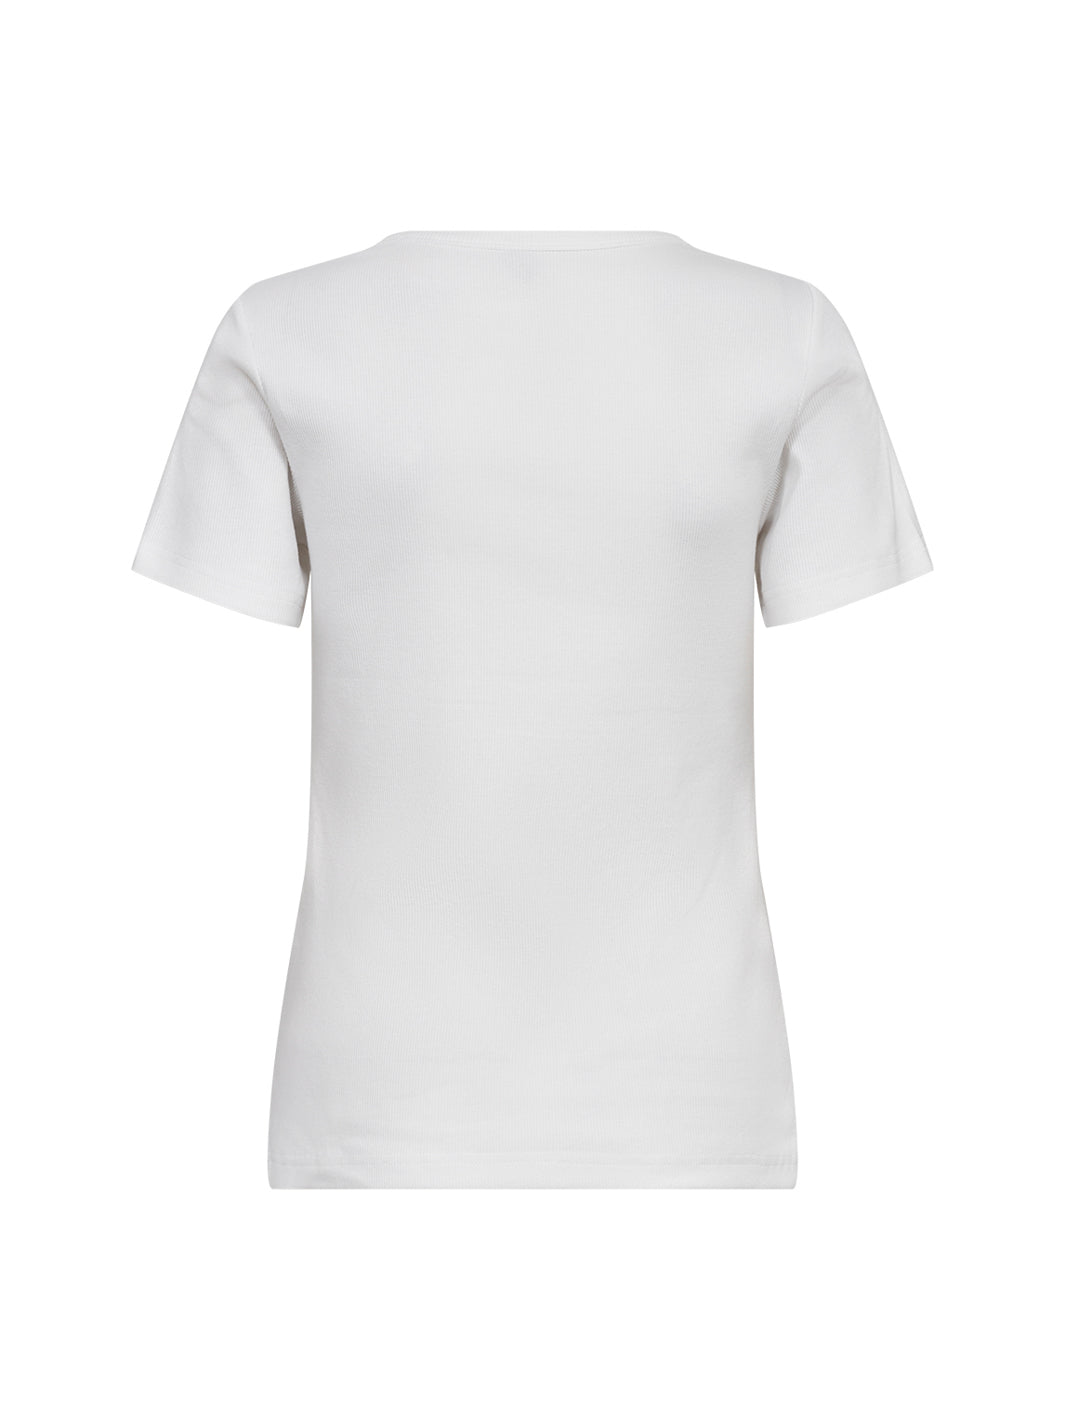 Soya Concept Mignon 3 t-shirt white - Online-Mode